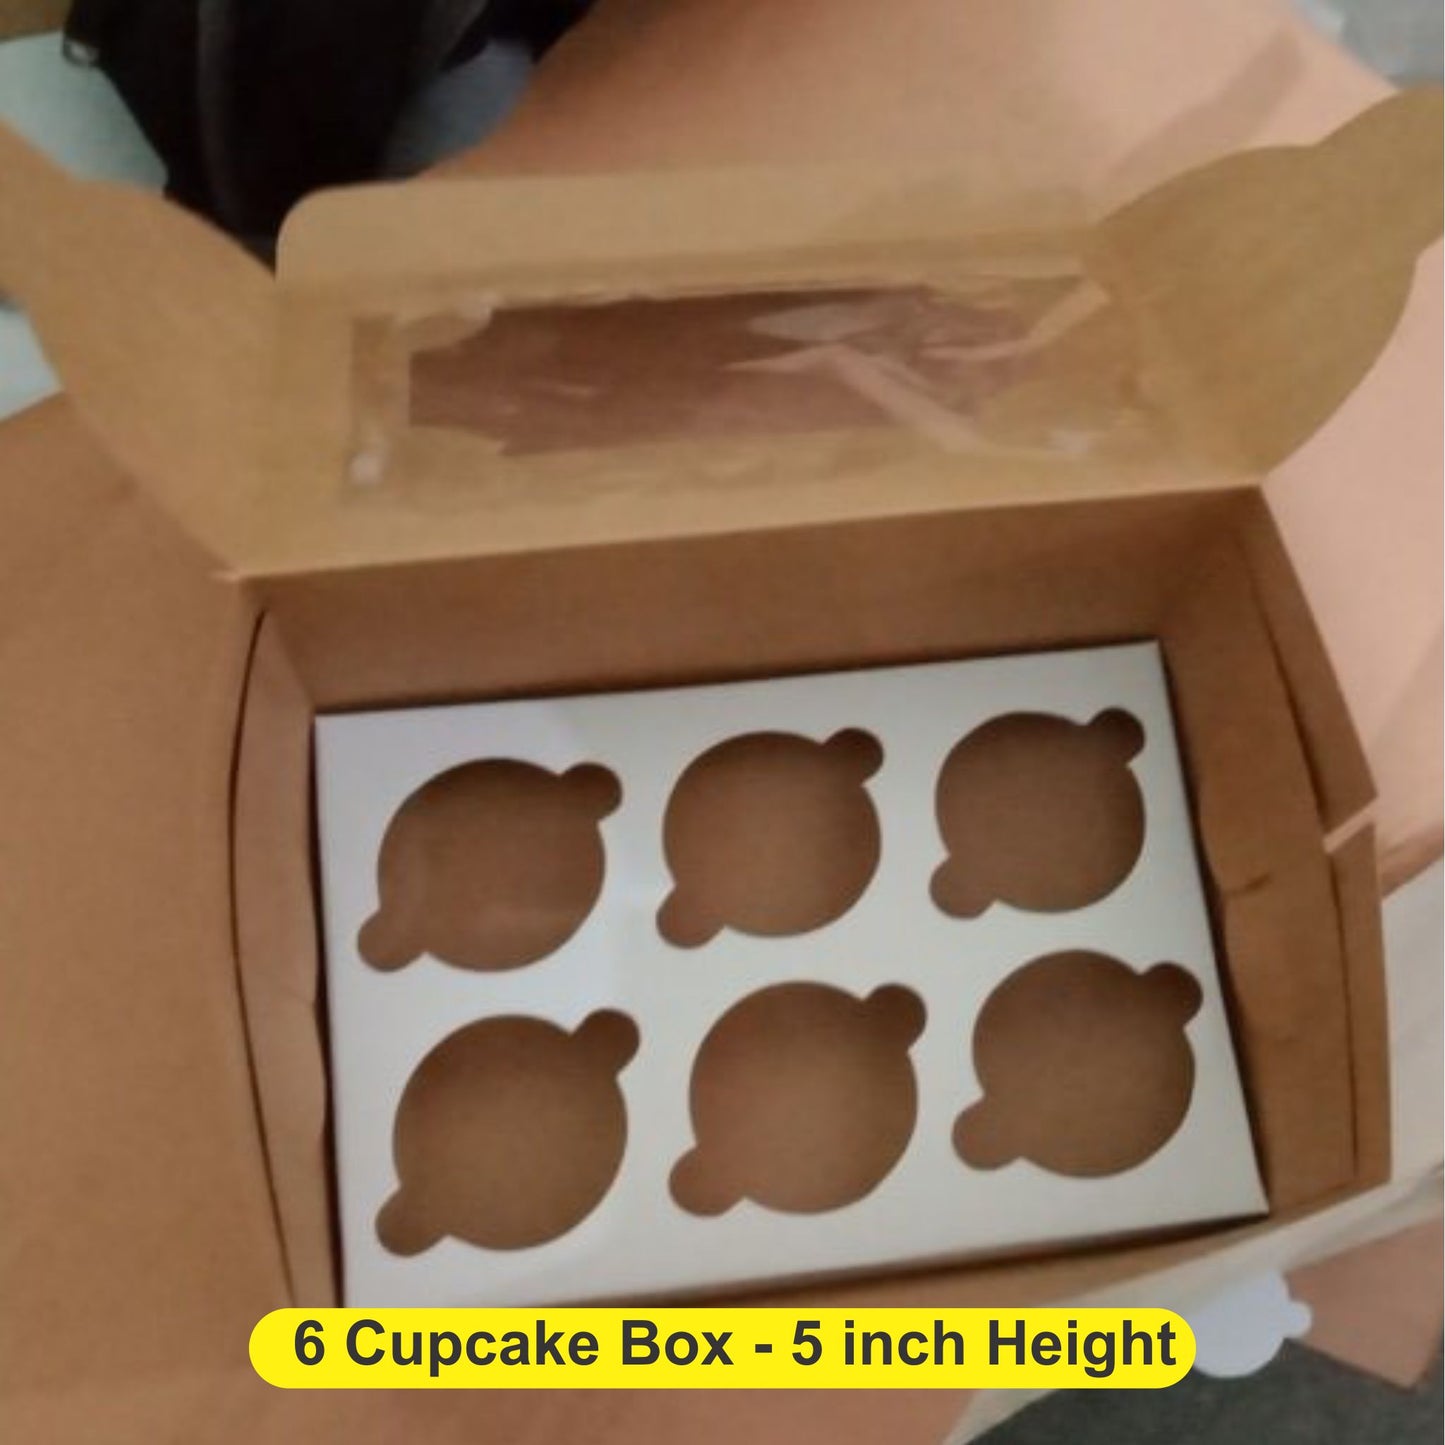 6 Cupcake Box - 5 inch height